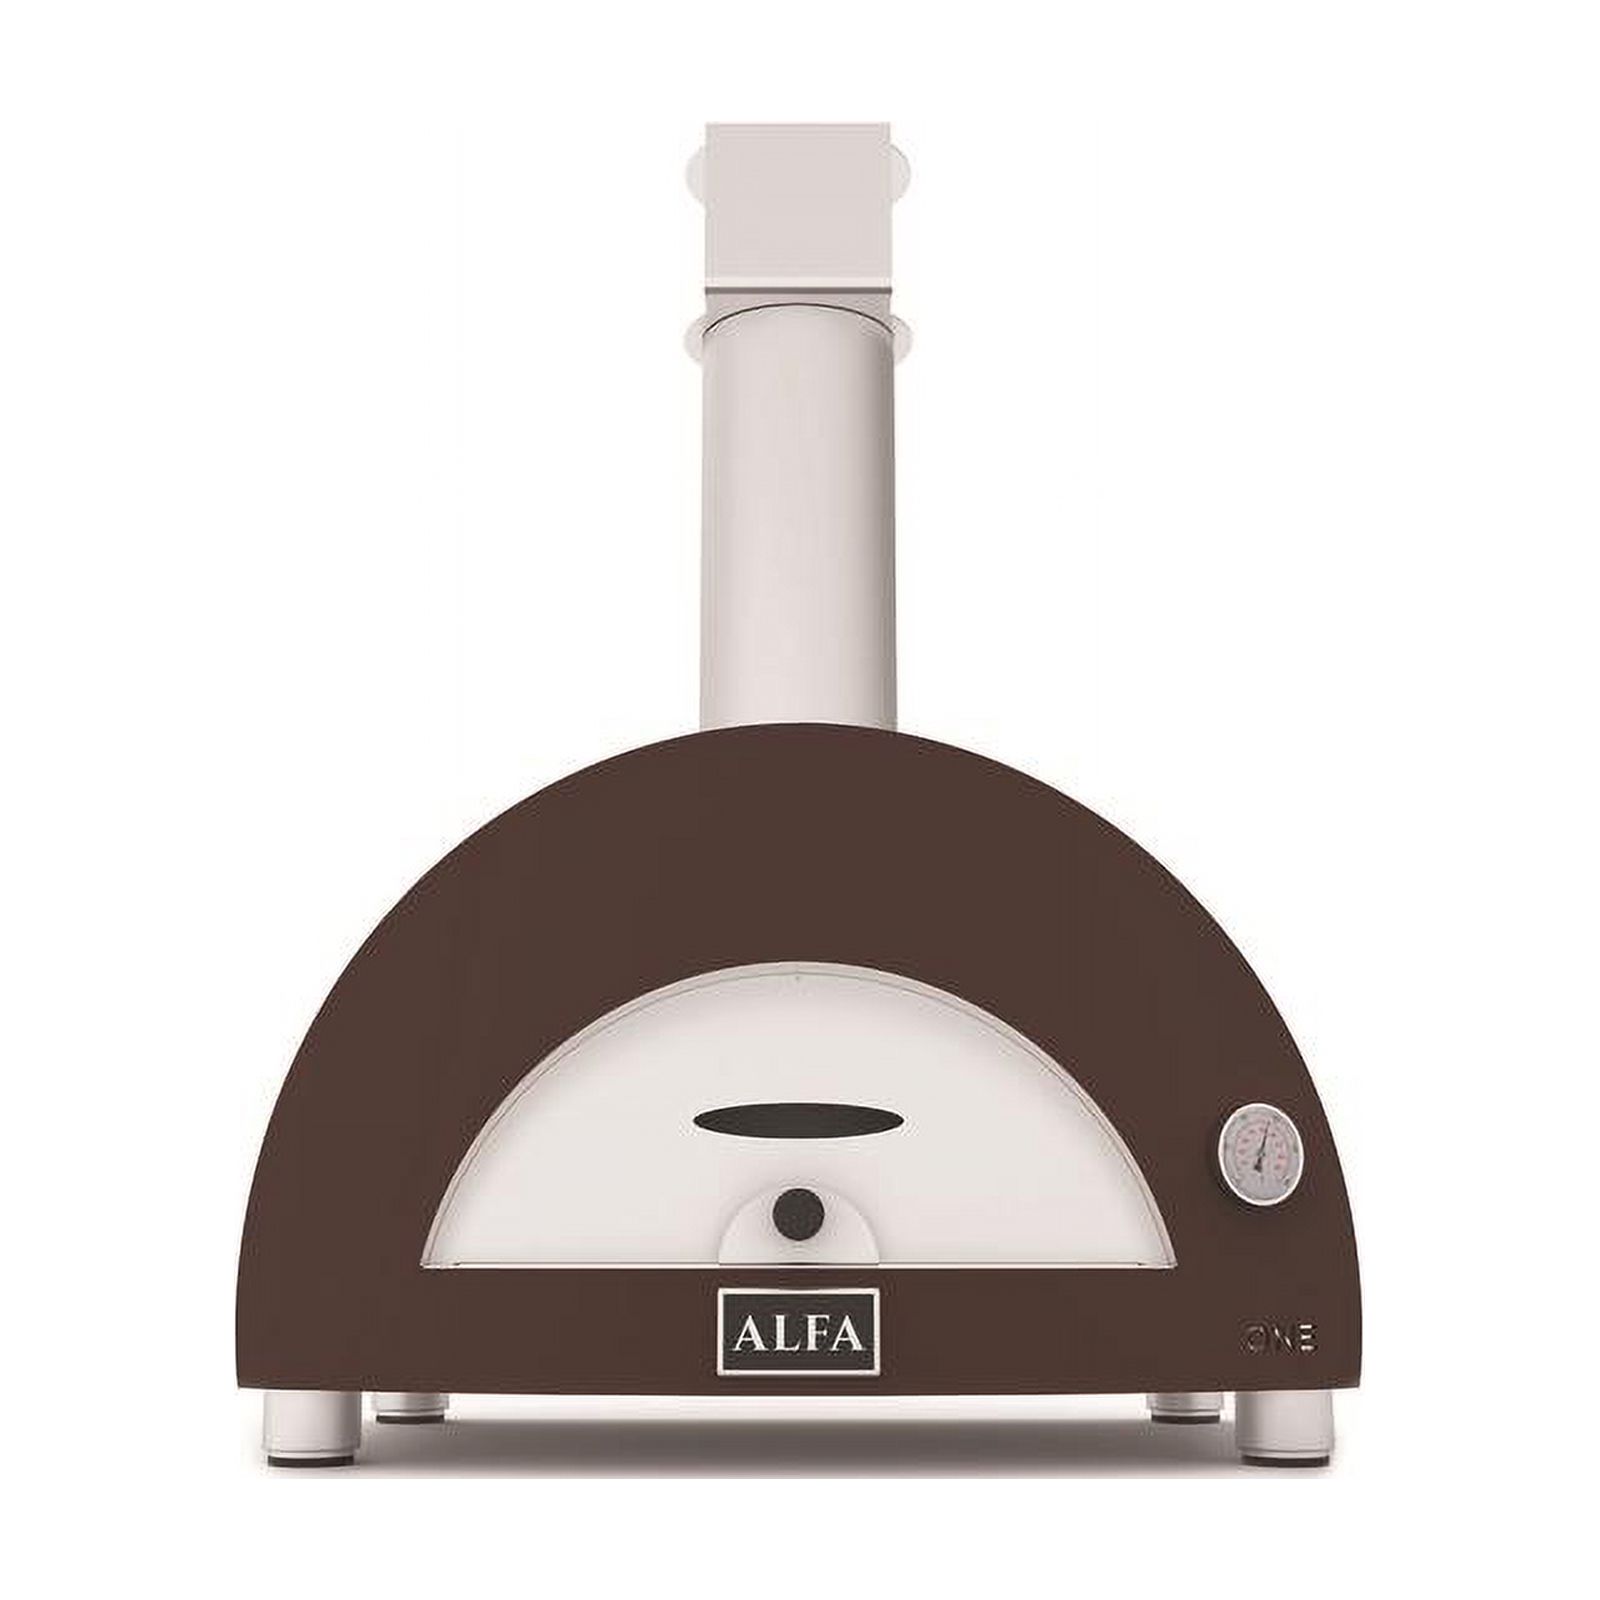 Alfa Nano 29 in. Wood Outdoor Pizza Oven Copper - image 3 of 3